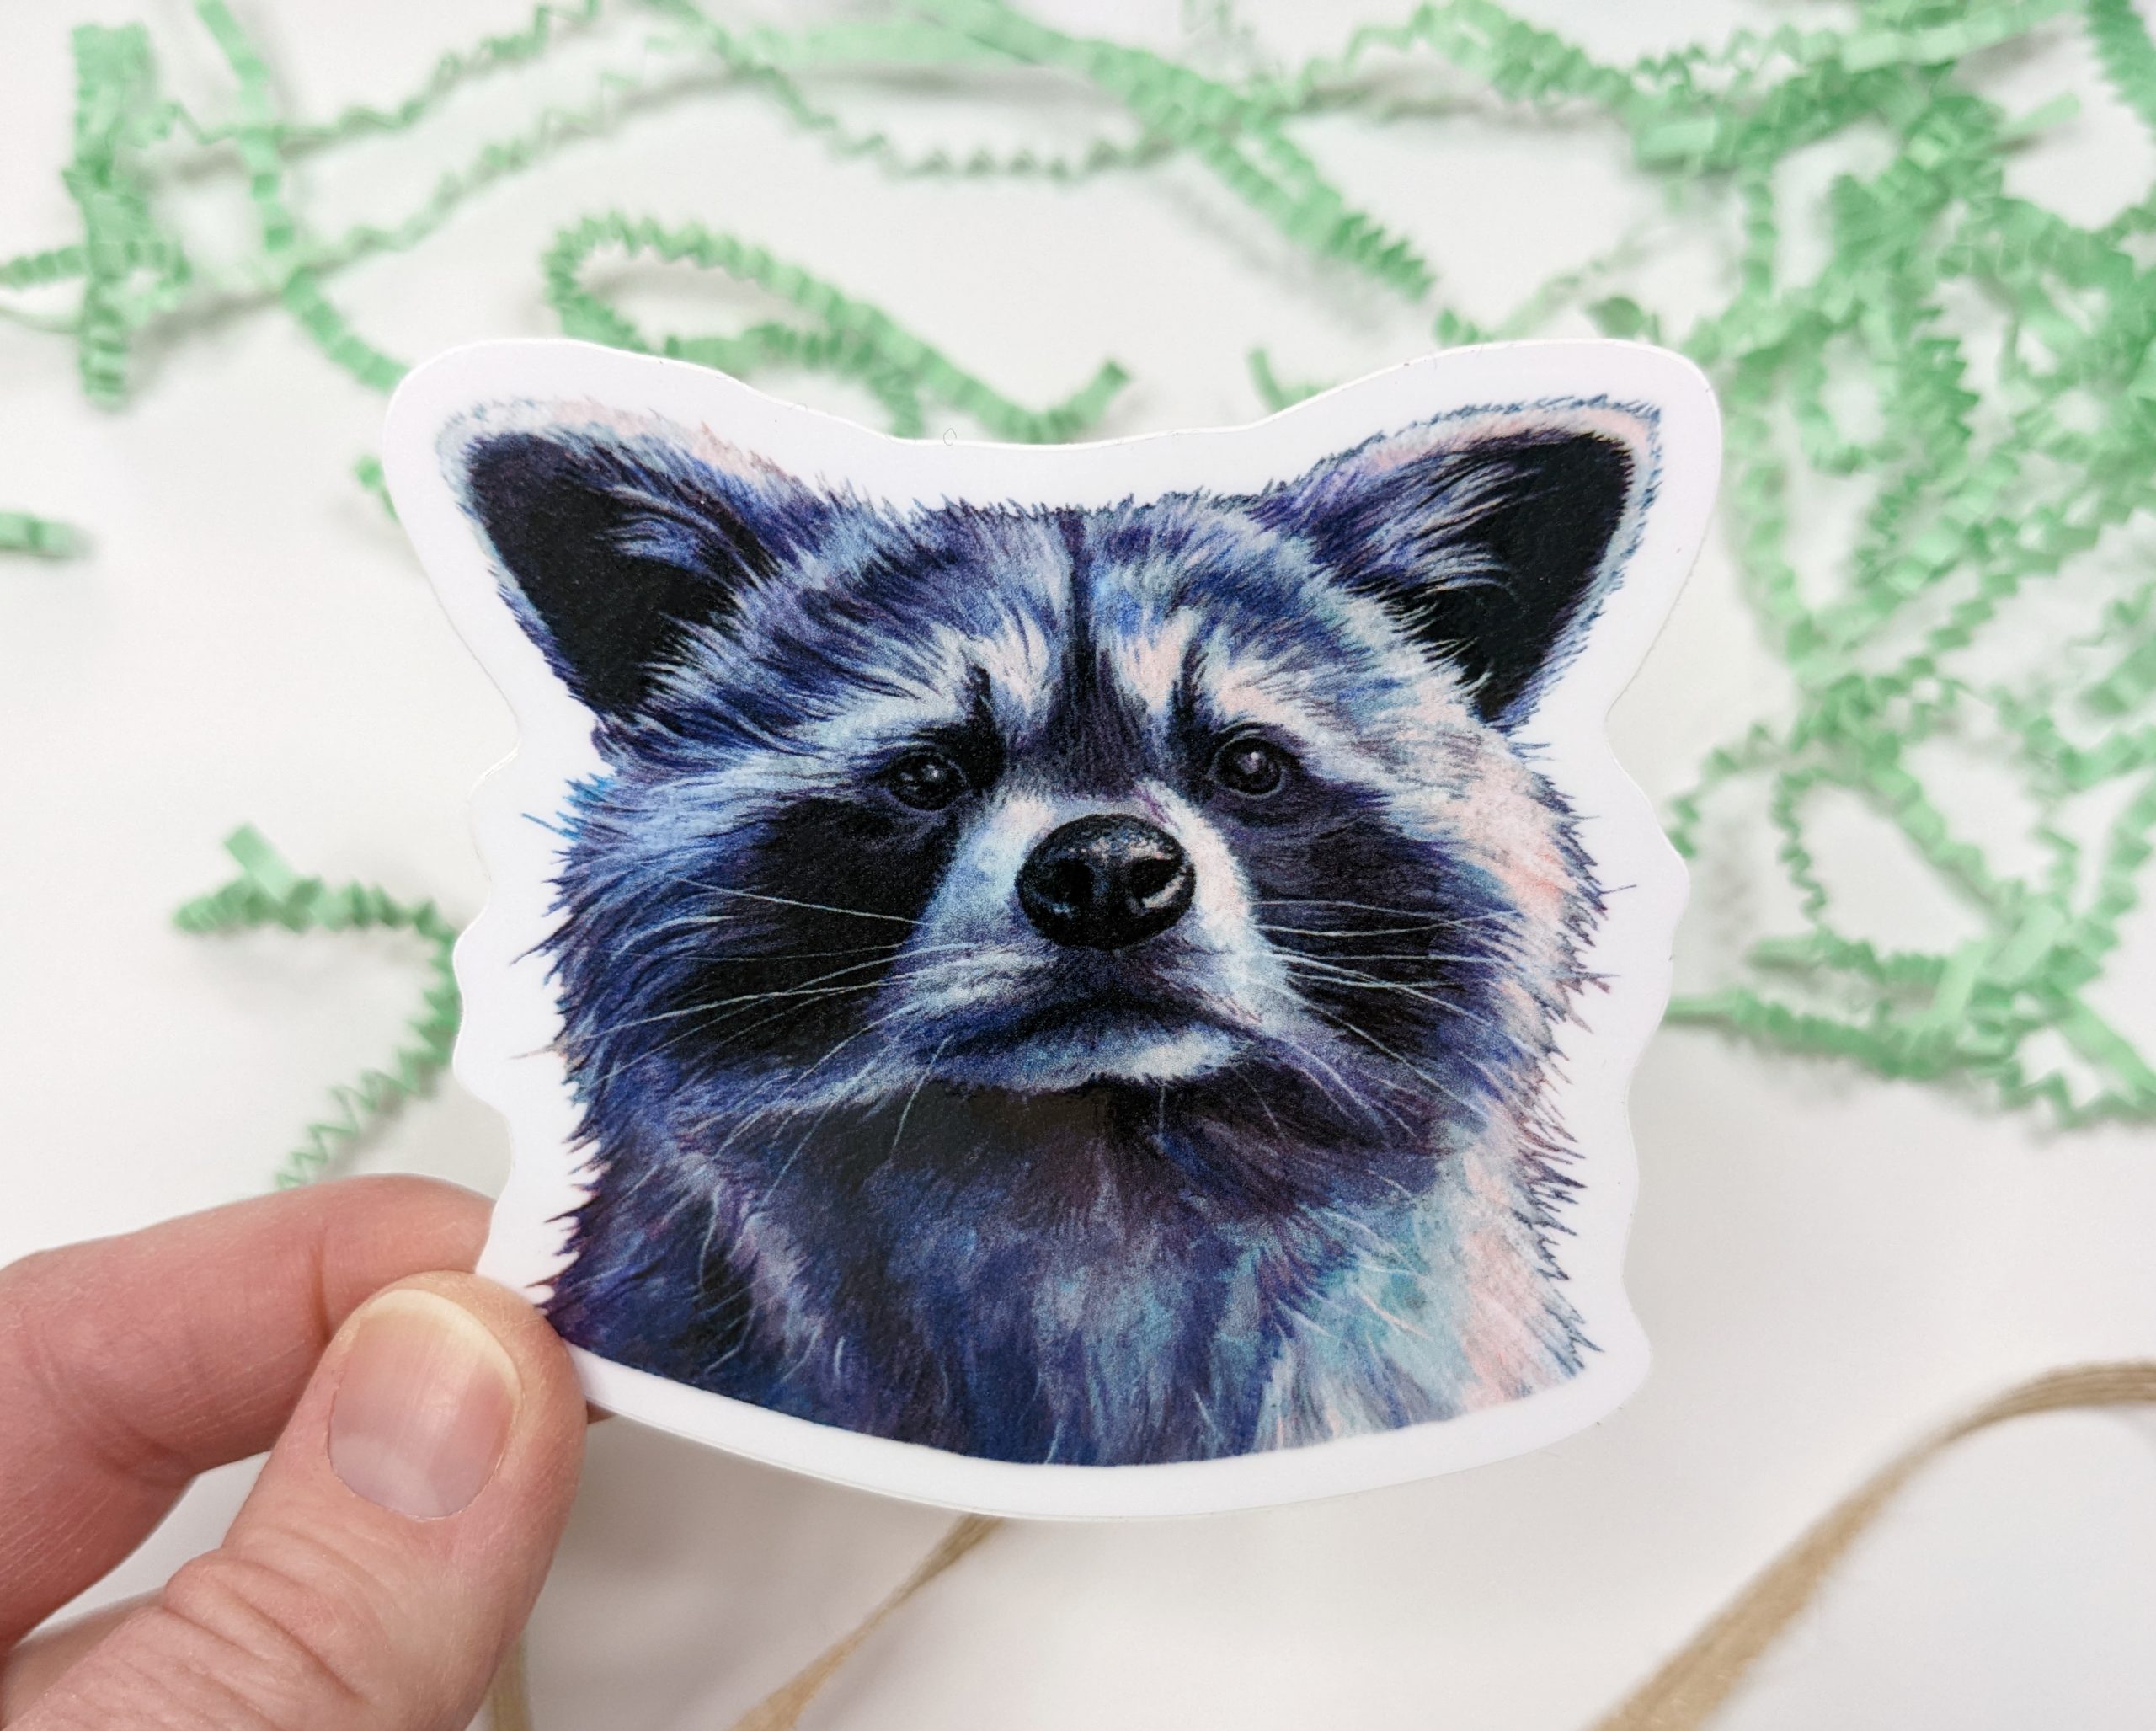 The Raccoon Sticker